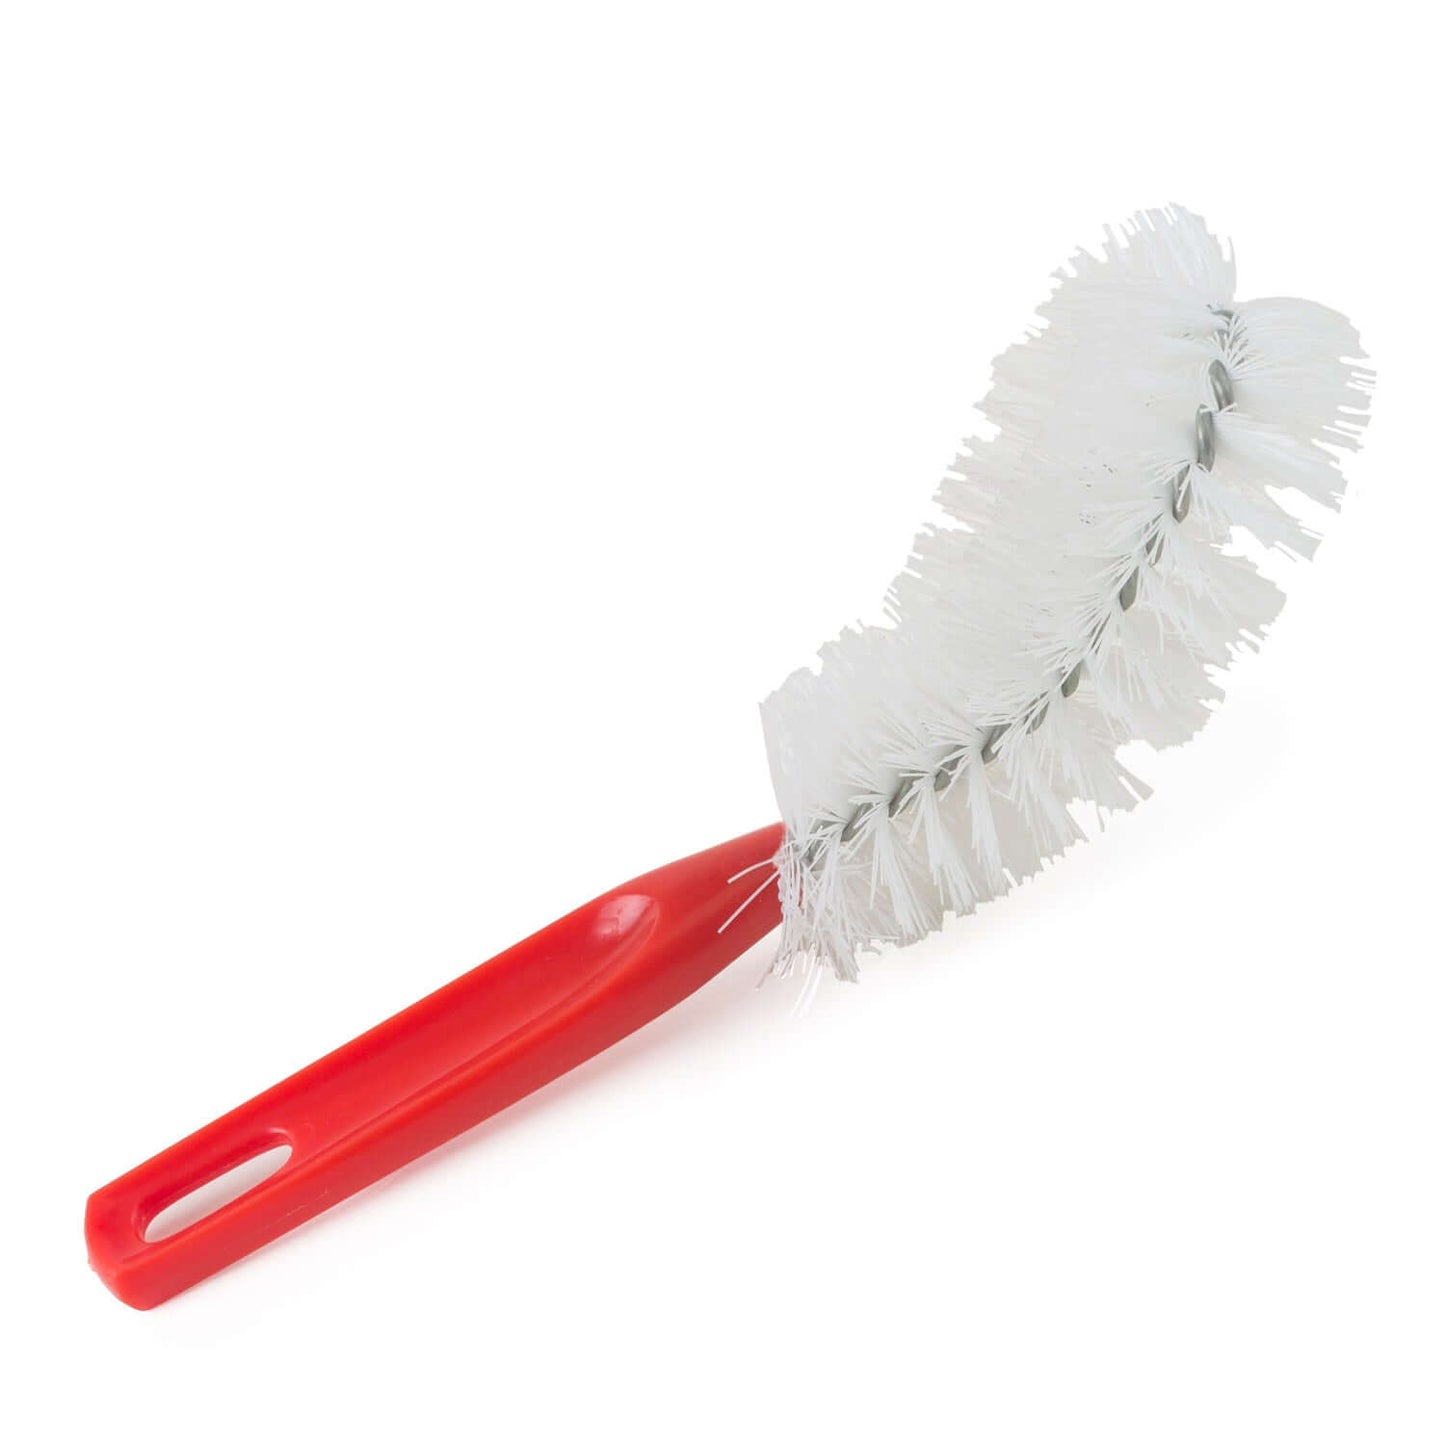 Multipurpose Cleaning Brush